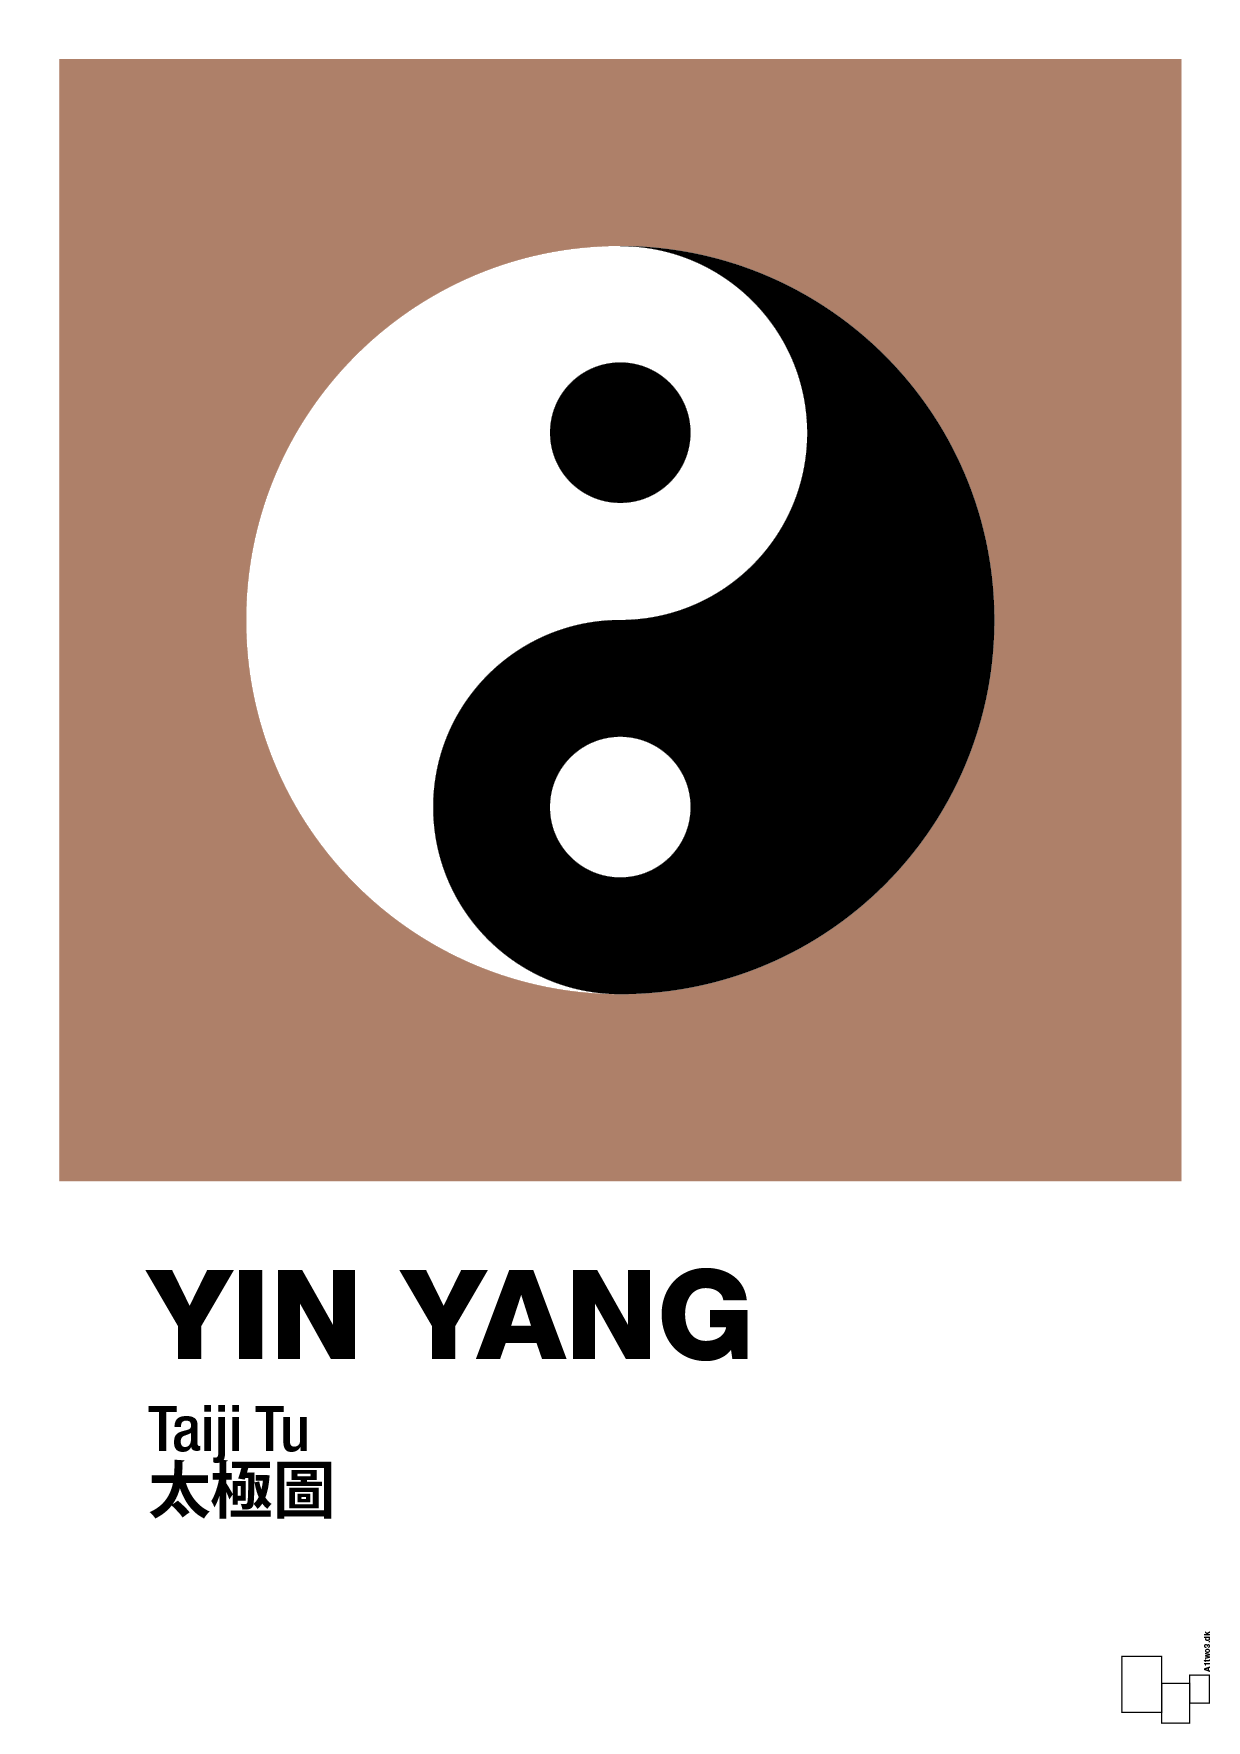 yin yang - Plakat med Videnskab i Cider Spice